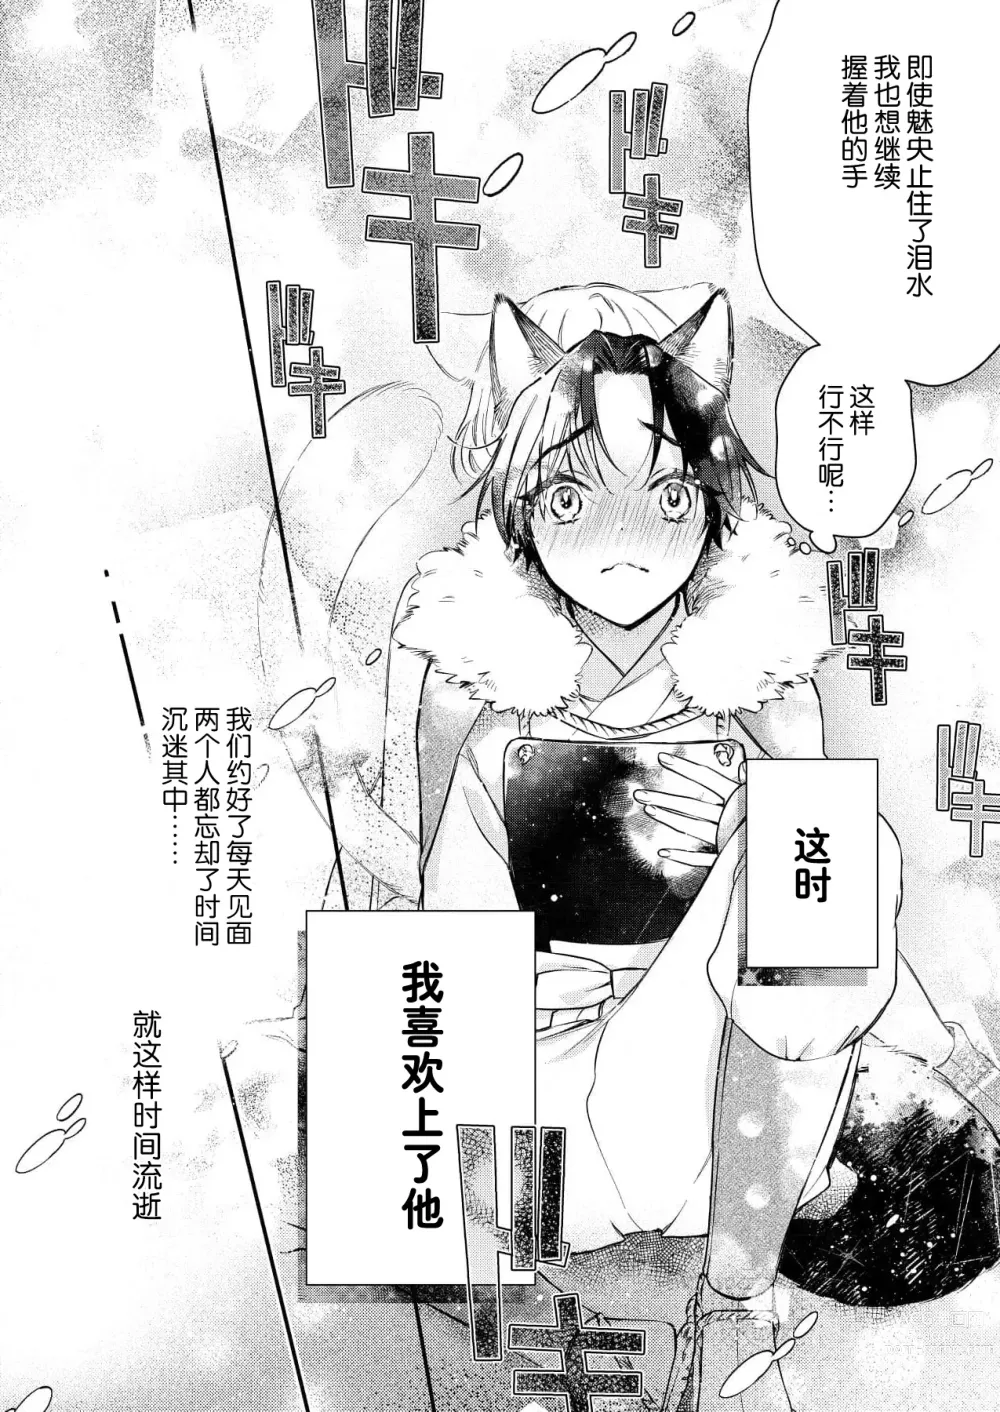 Page 7 of manga 无可奈何花落去 只叹道，命运使然 1-7 end